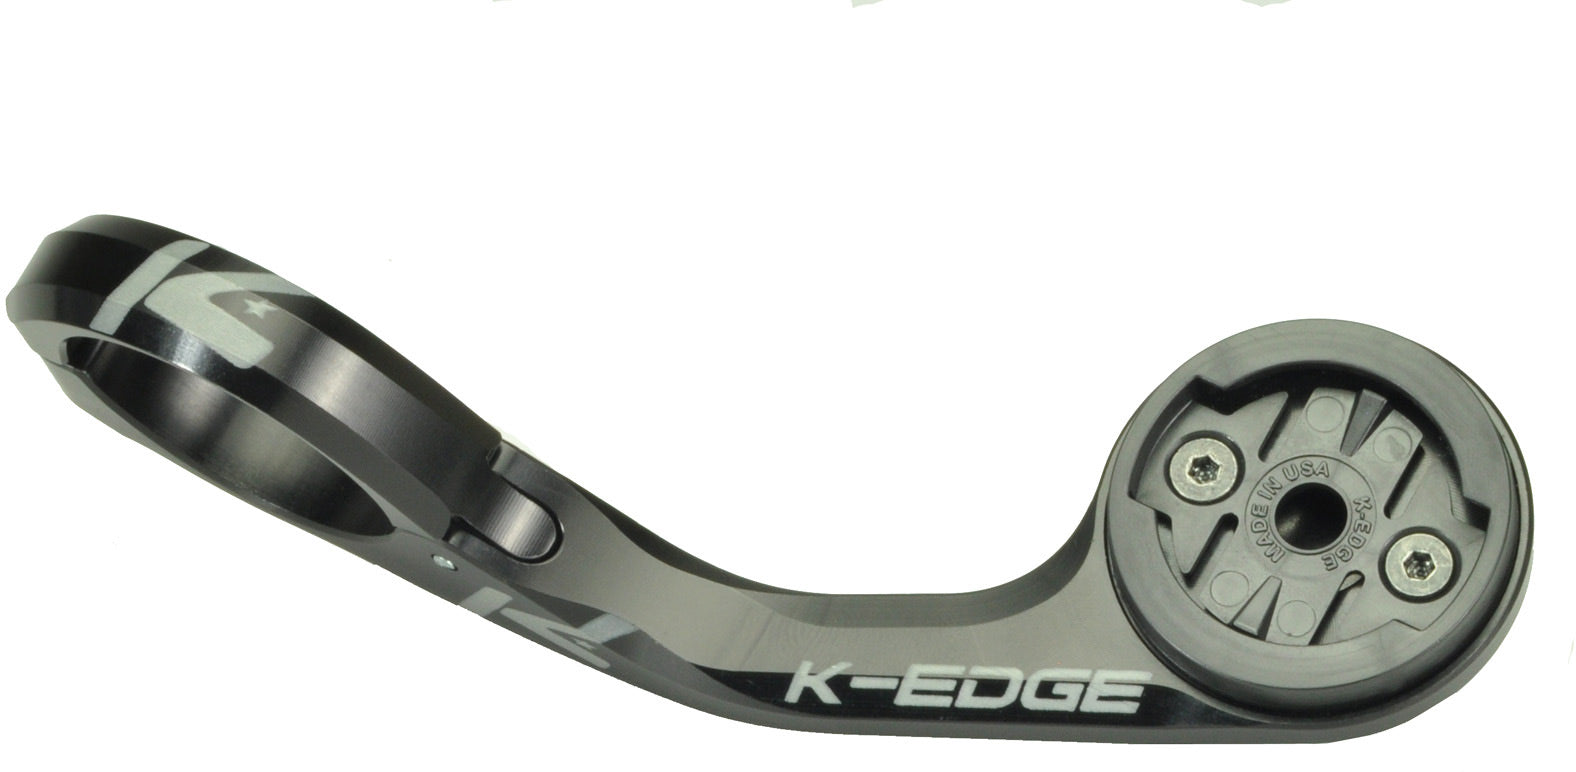 K-Edge Garmin Max Mount Black 31.8mm